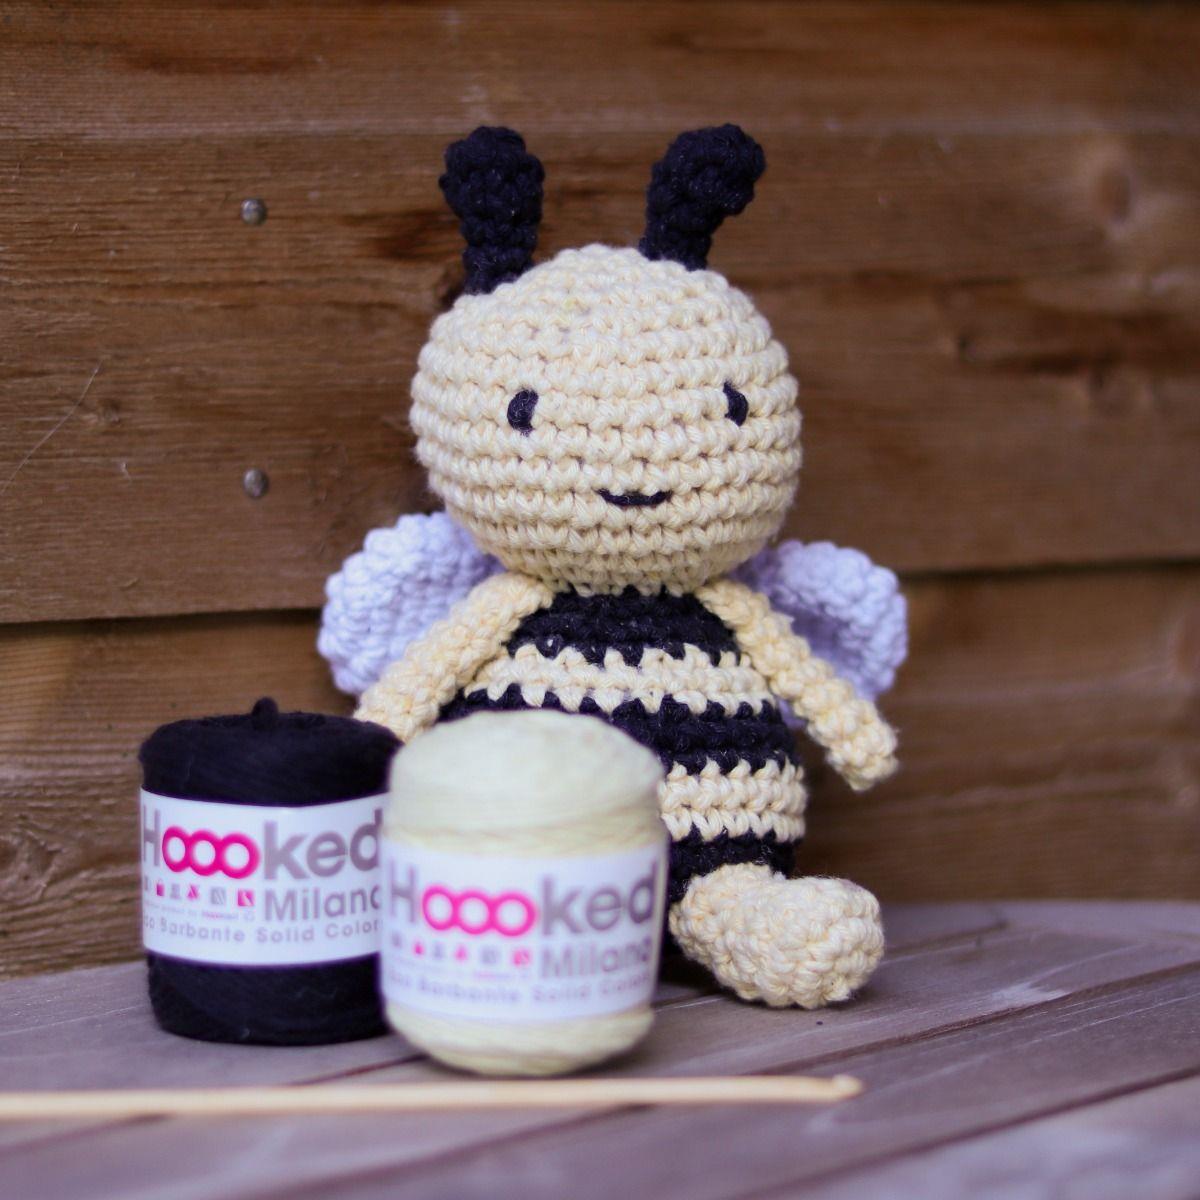 [Hoooked] PAK279 Eco Barbante Milano Popcorn Cotton Bee Honey Crochet Amigurumi Kit